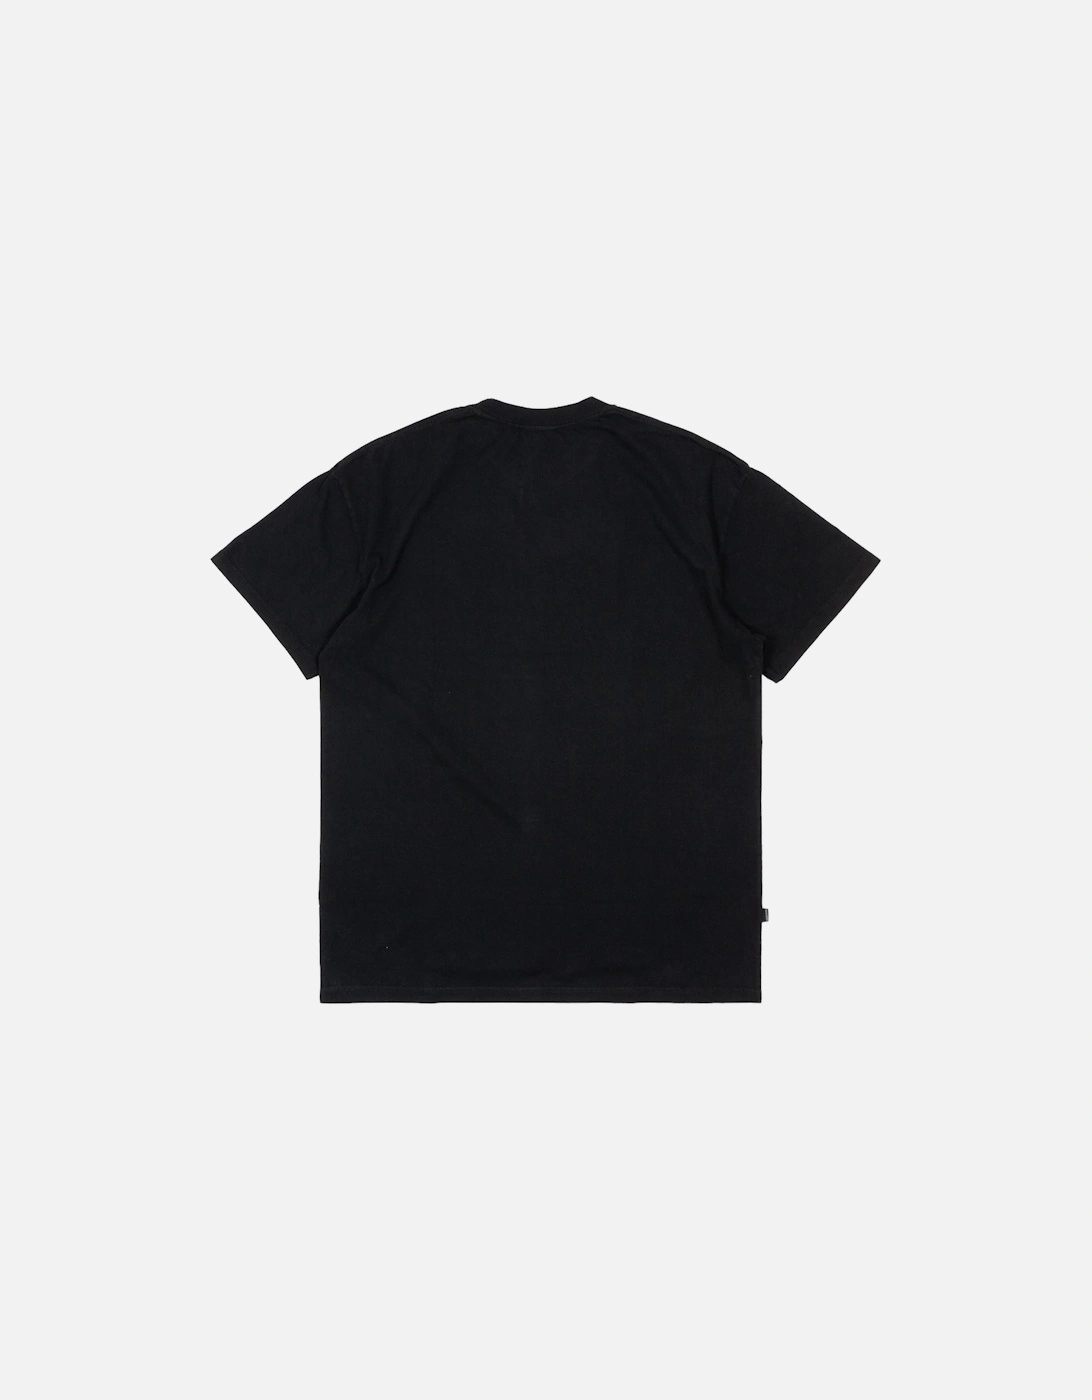 Australian Bones T-Shirt - Pigment Black